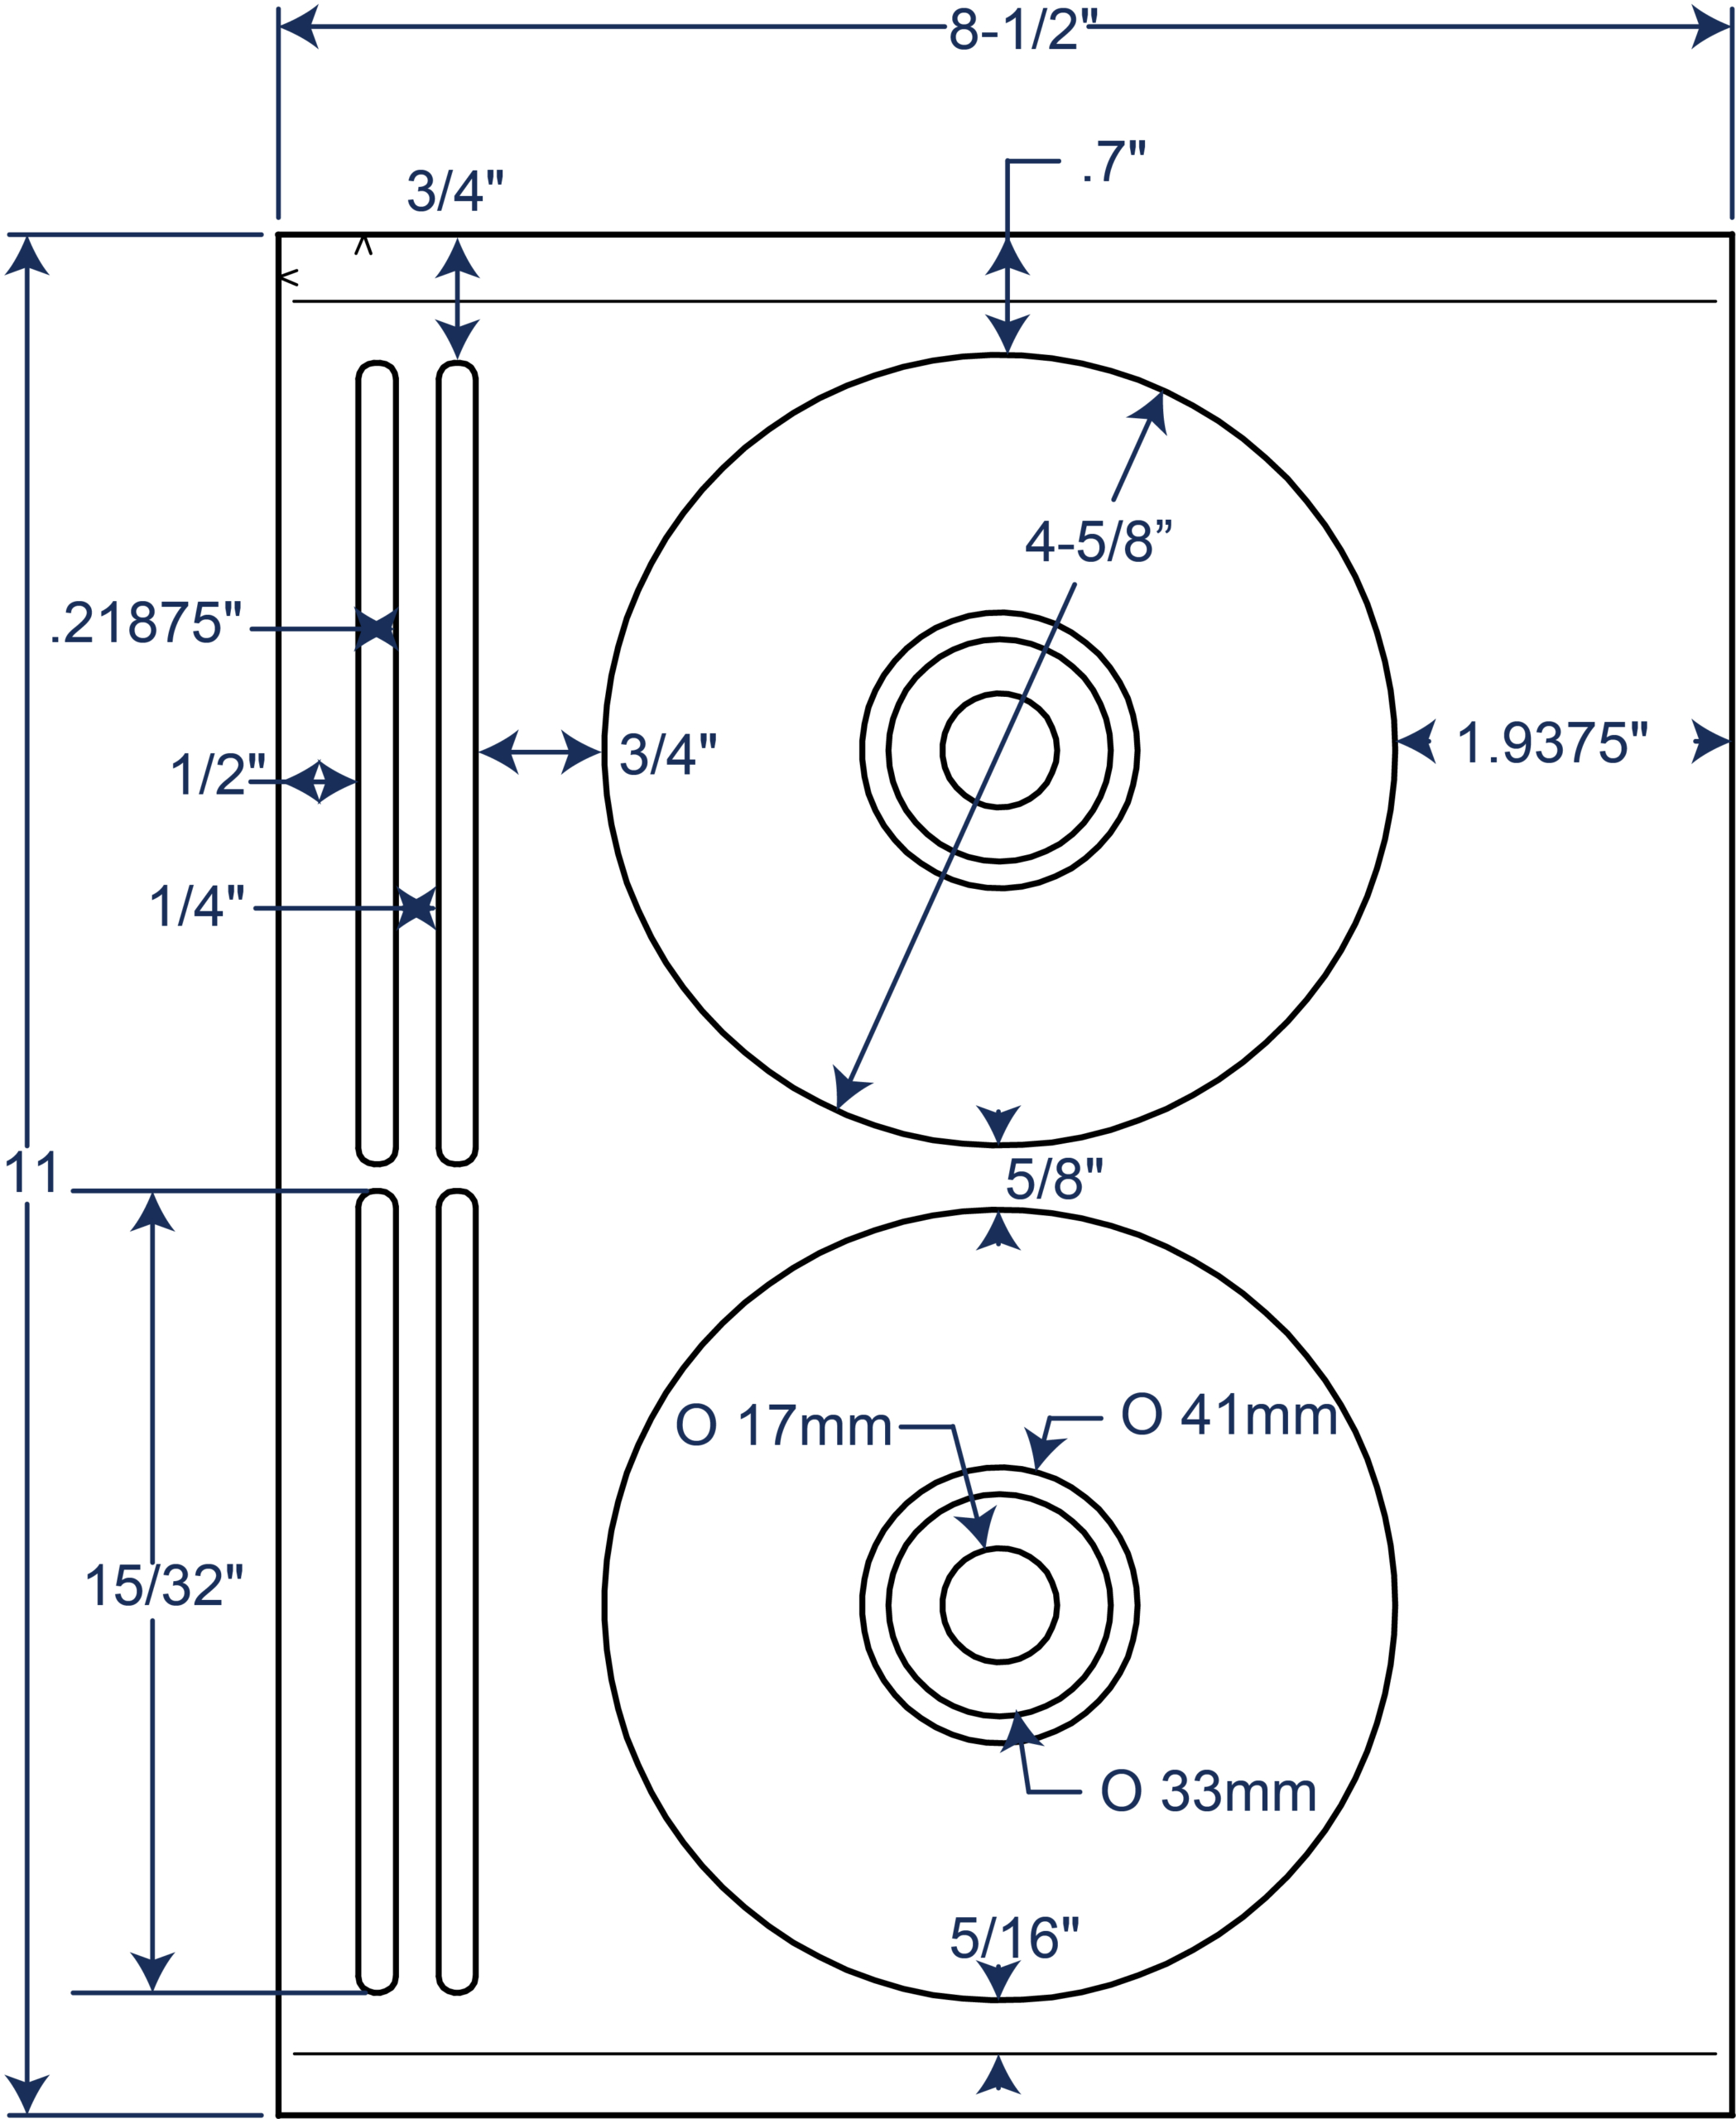 4-5/8" Diameter Laser/Inkjet CD/DVD Donut with Hub Cap Labels